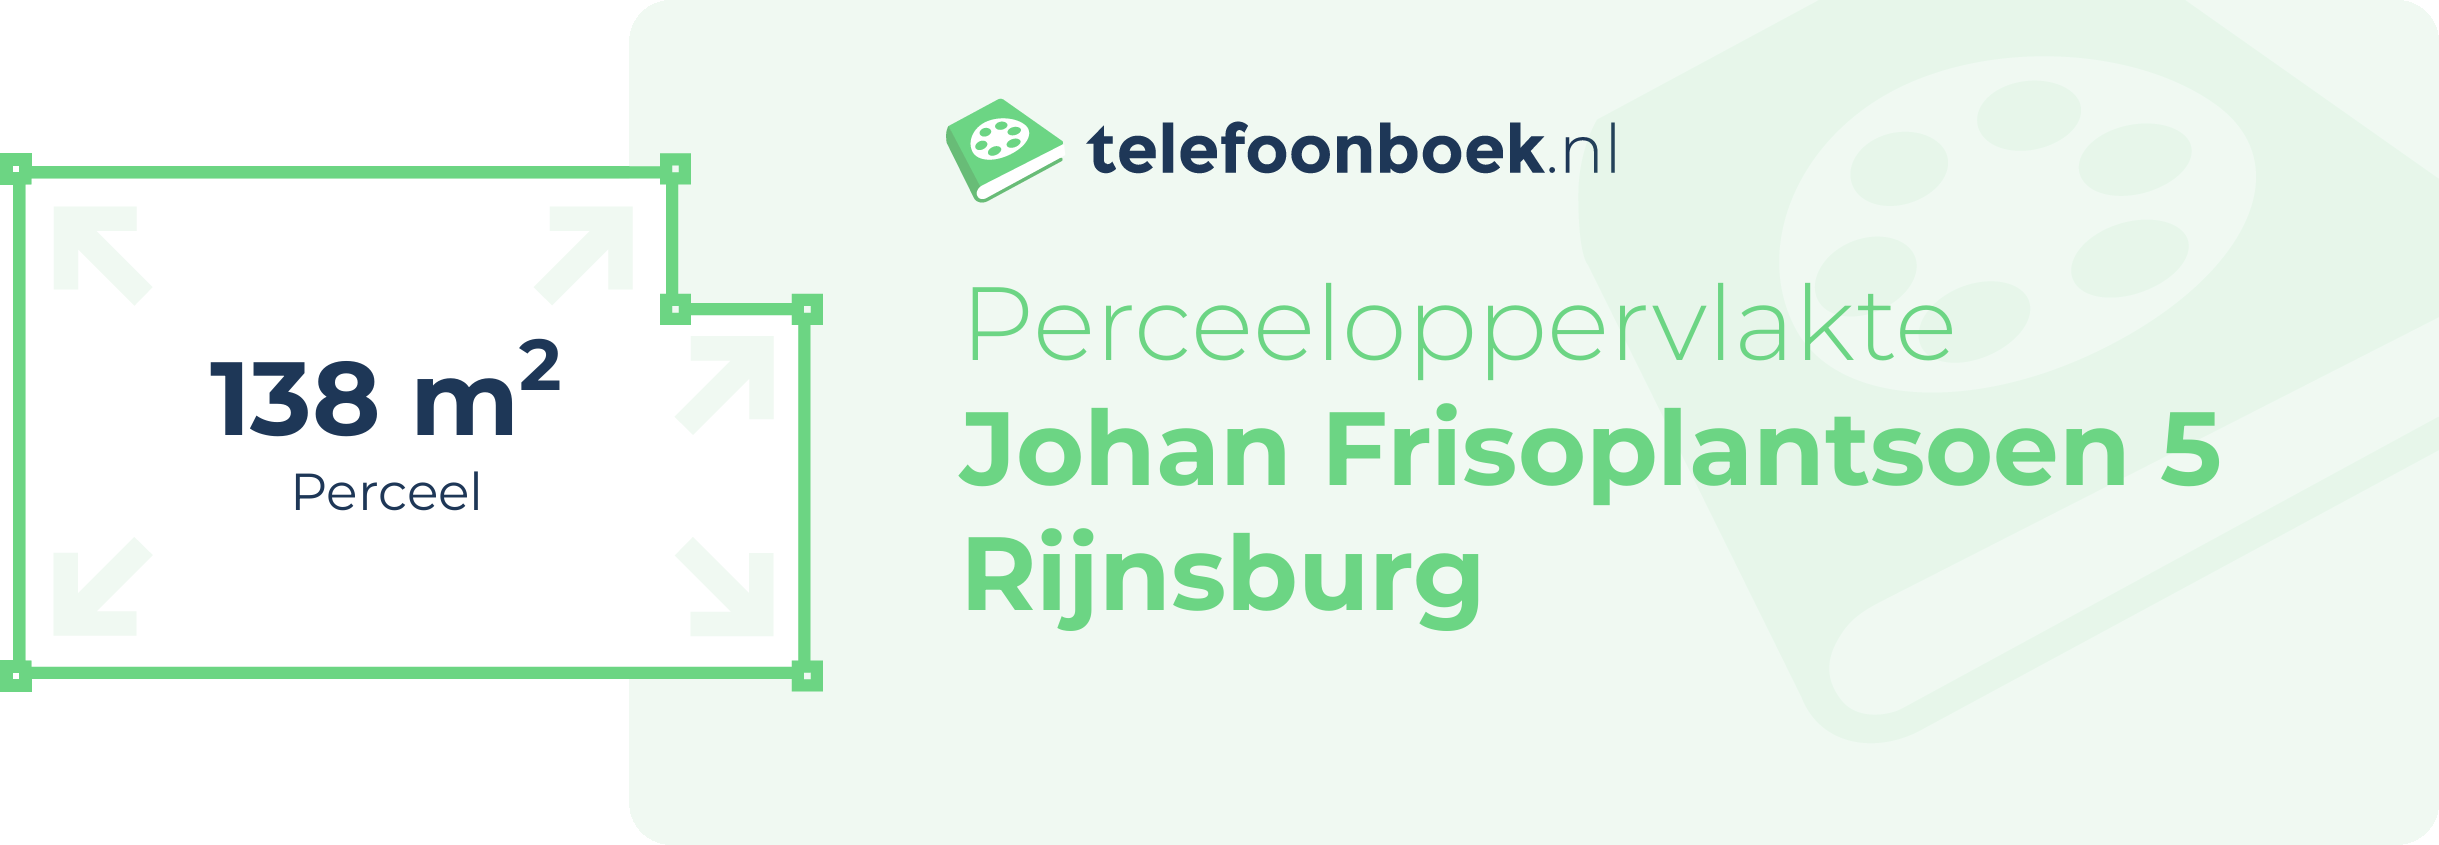 Perceeloppervlakte Johan Frisoplantsoen 5 Rijnsburg